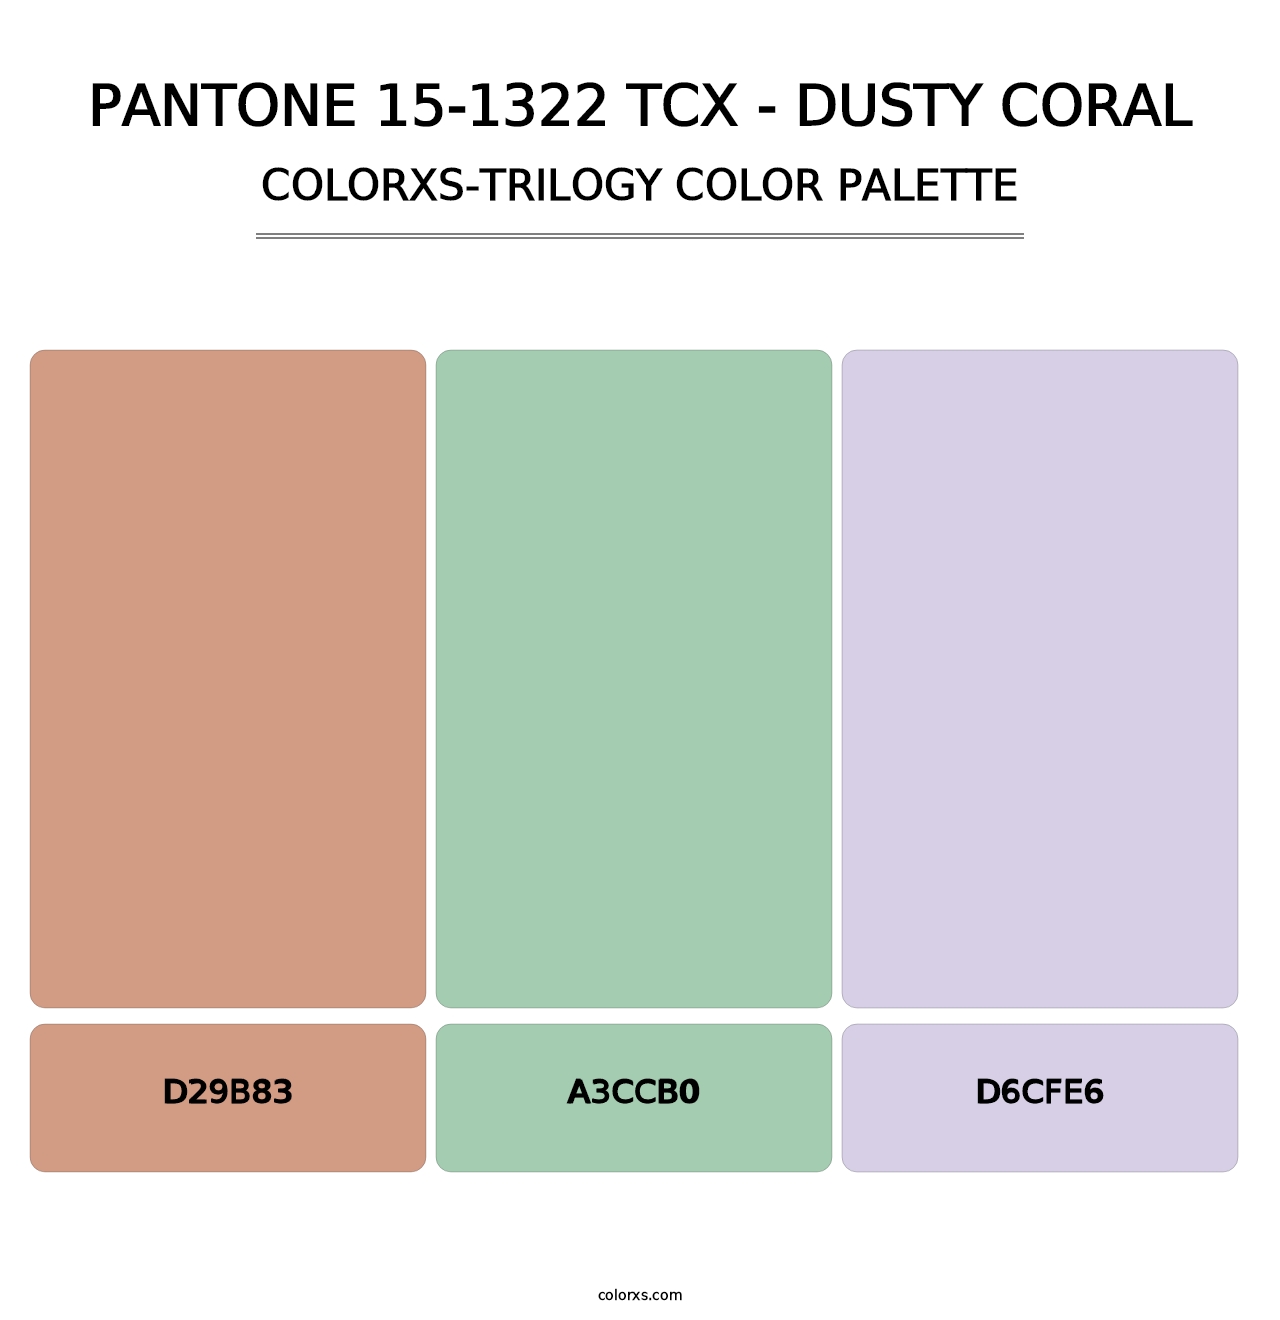 PANTONE 15-1322 TCX - Dusty Coral - Colorxs Trilogy Palette